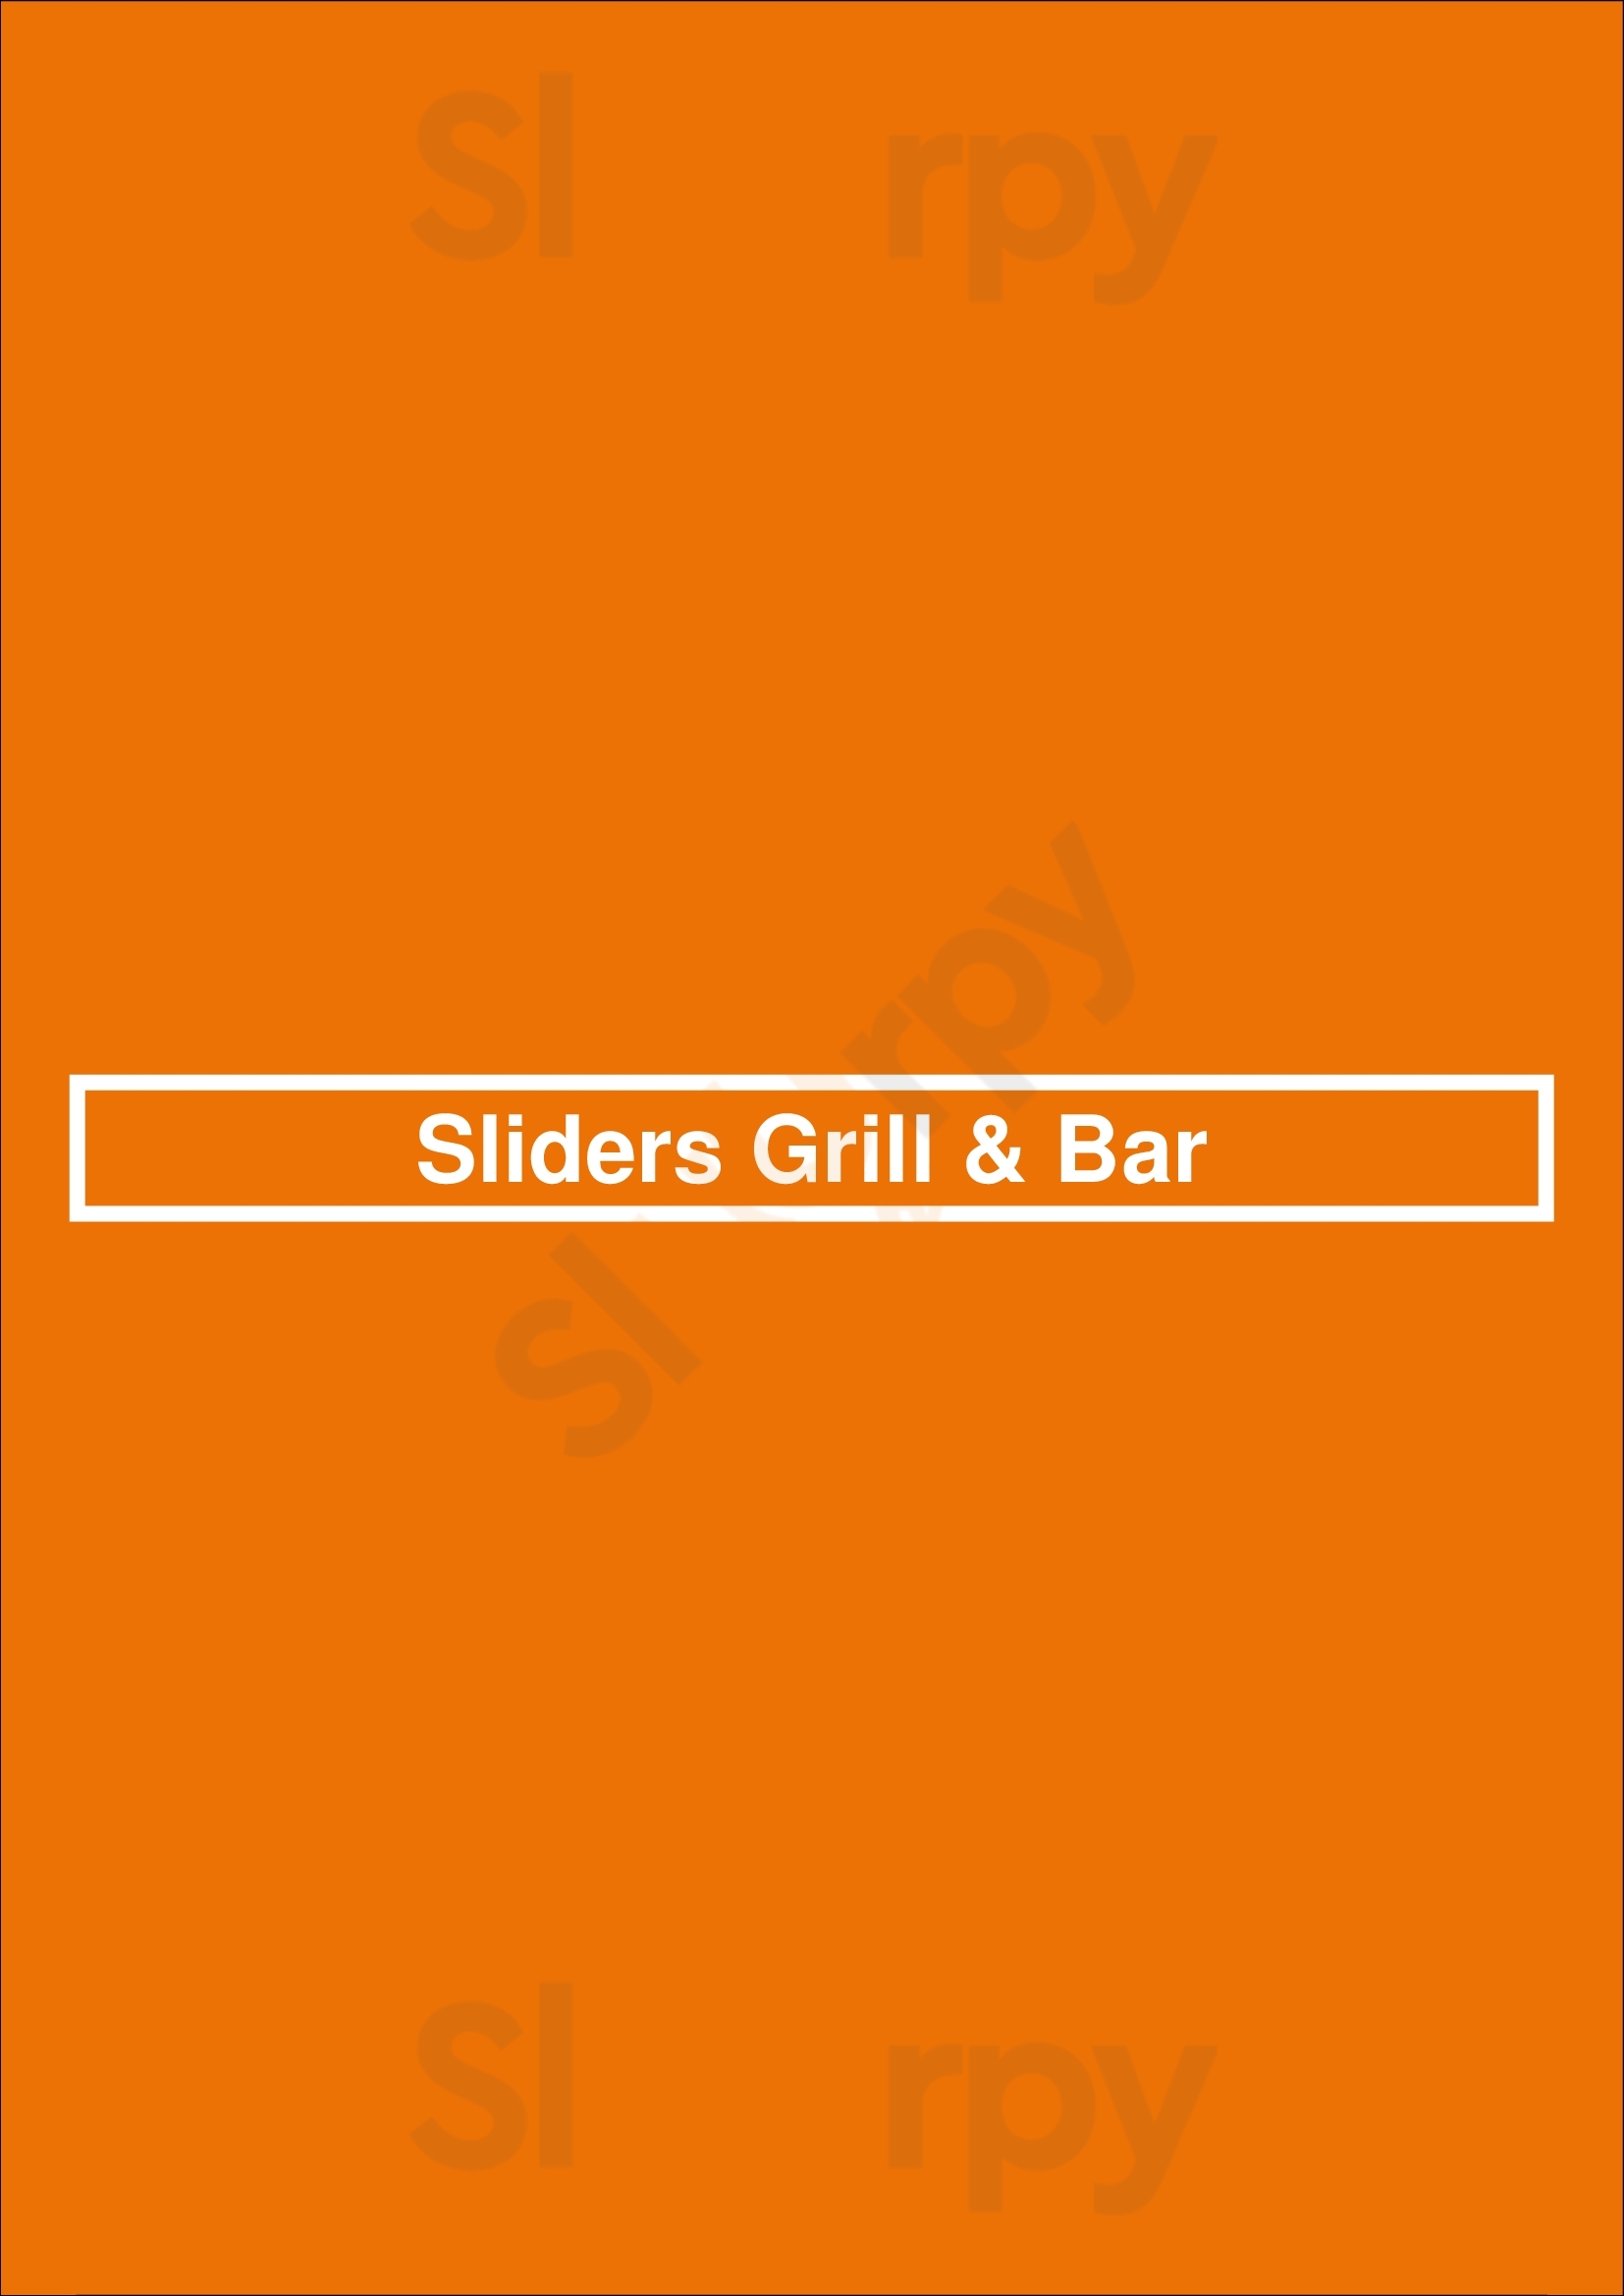 Sliders Grill & Bar - Southington, Ct Plantsville Menu - 1